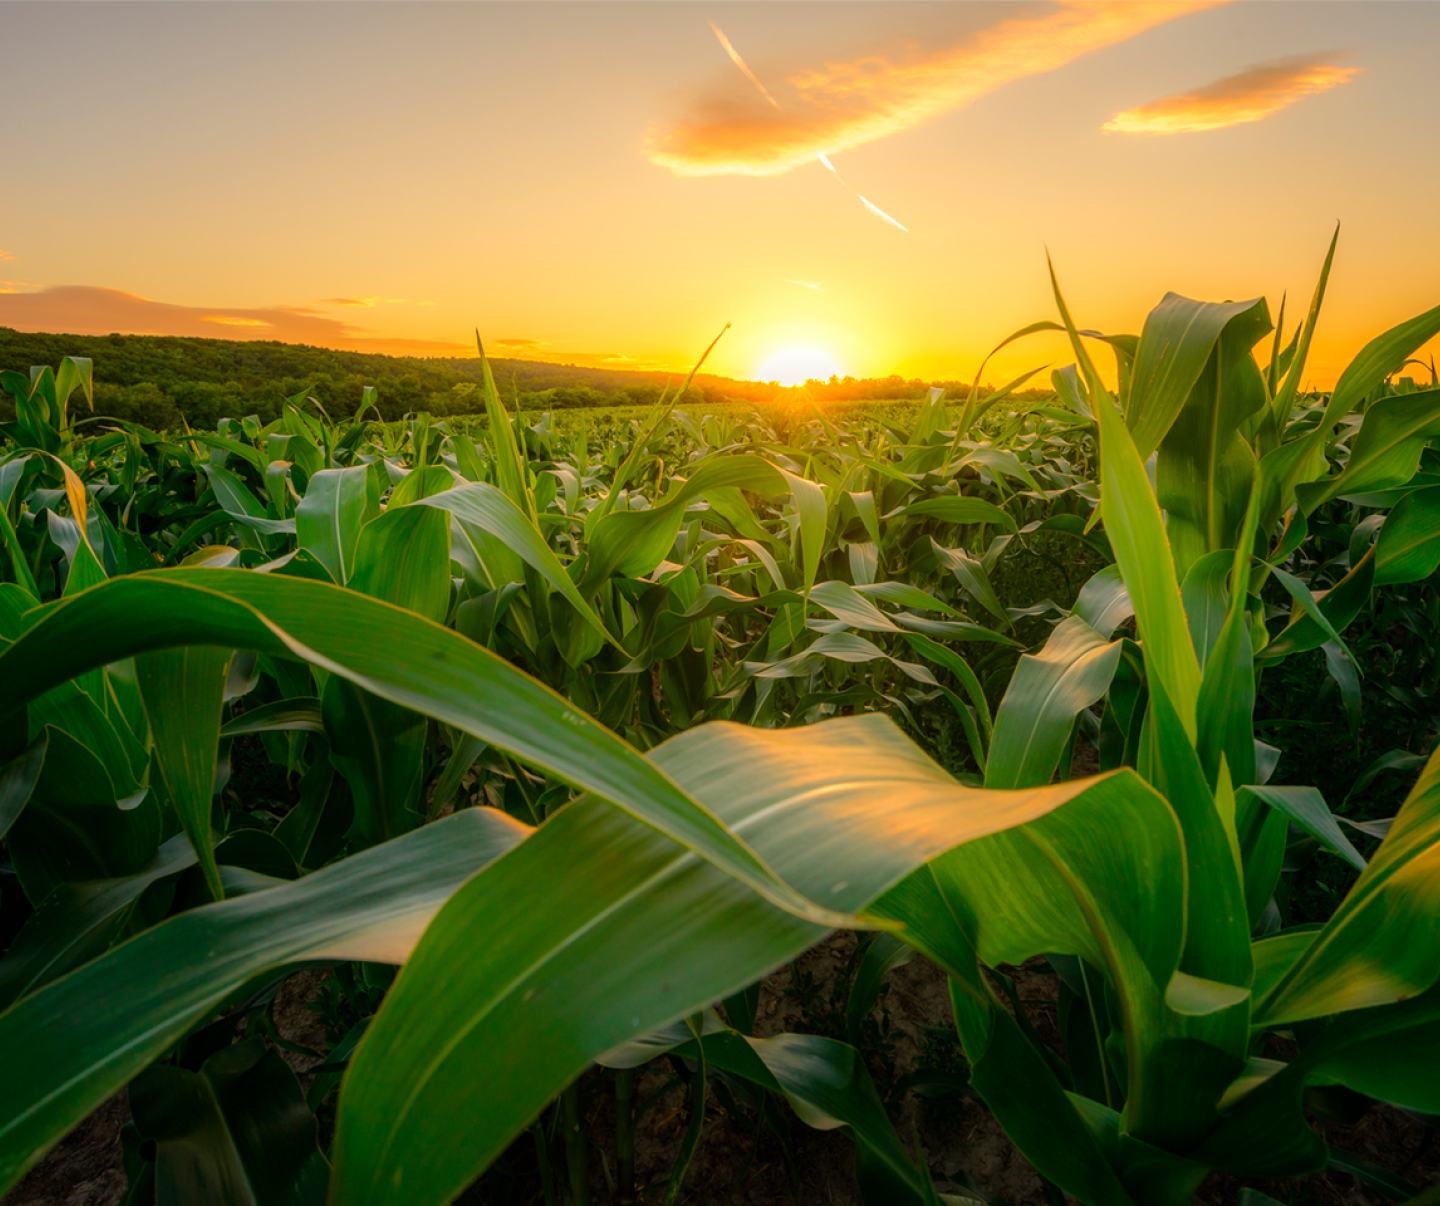 Corn field at sunset.